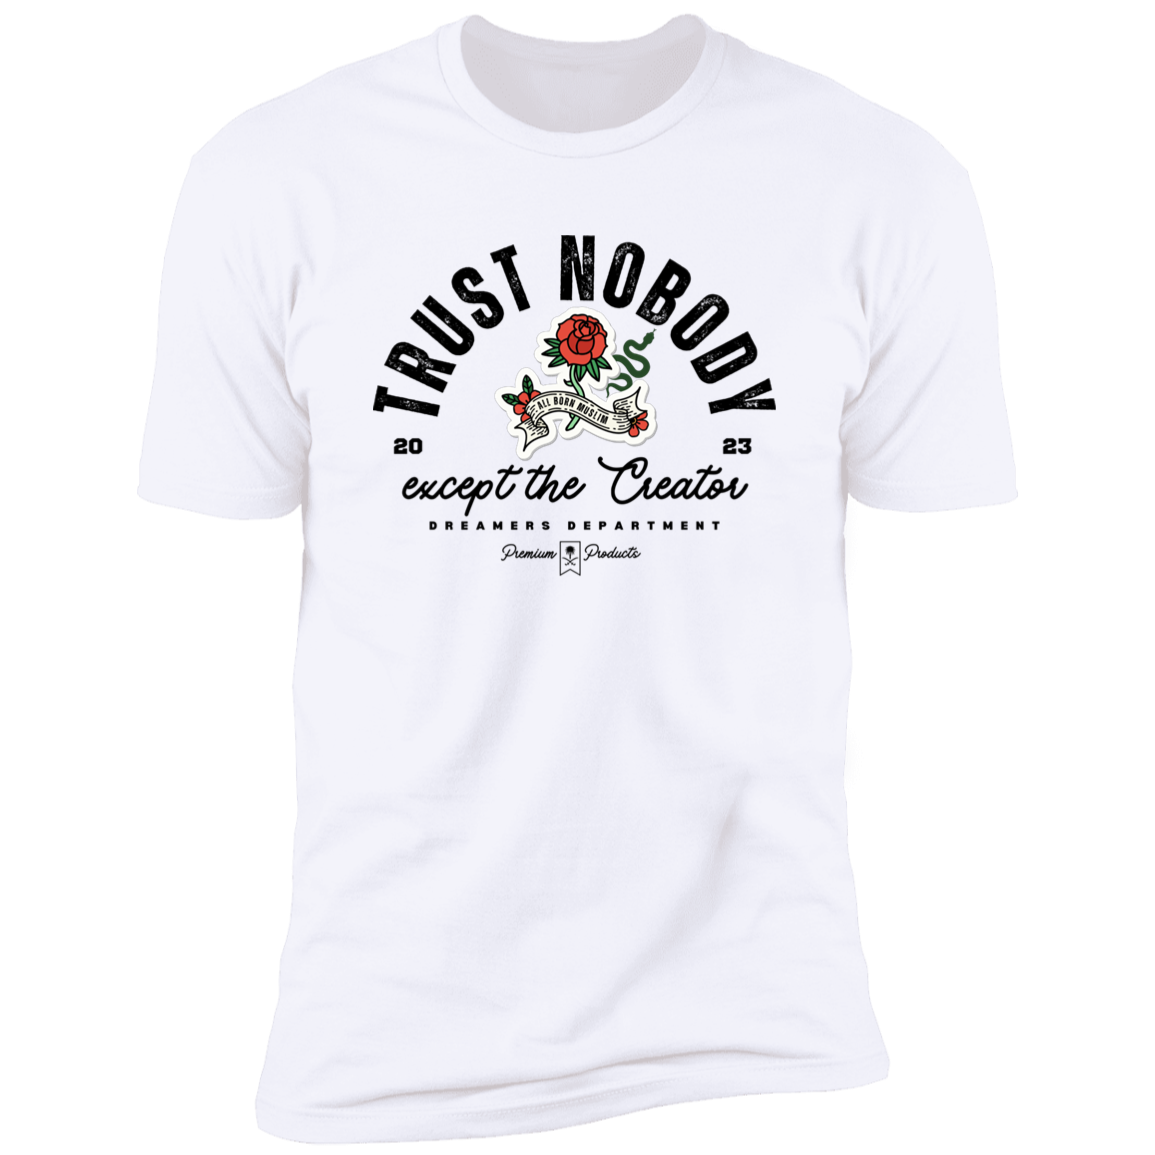 Trust Nobody Except the Creator Islamic T-shirt